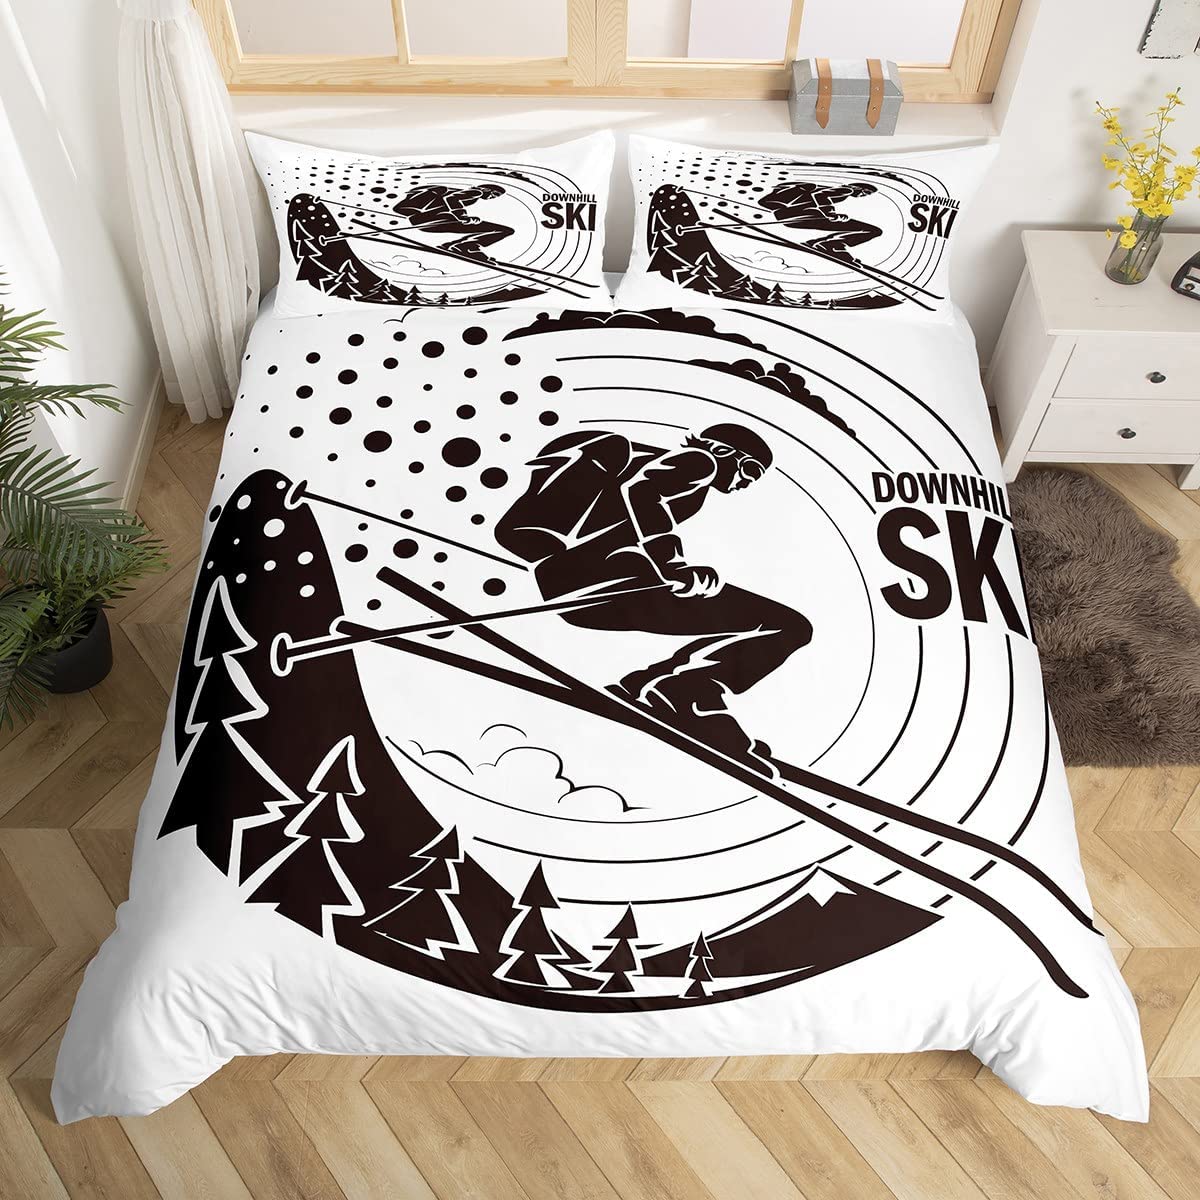 Black and white ski duvet cover